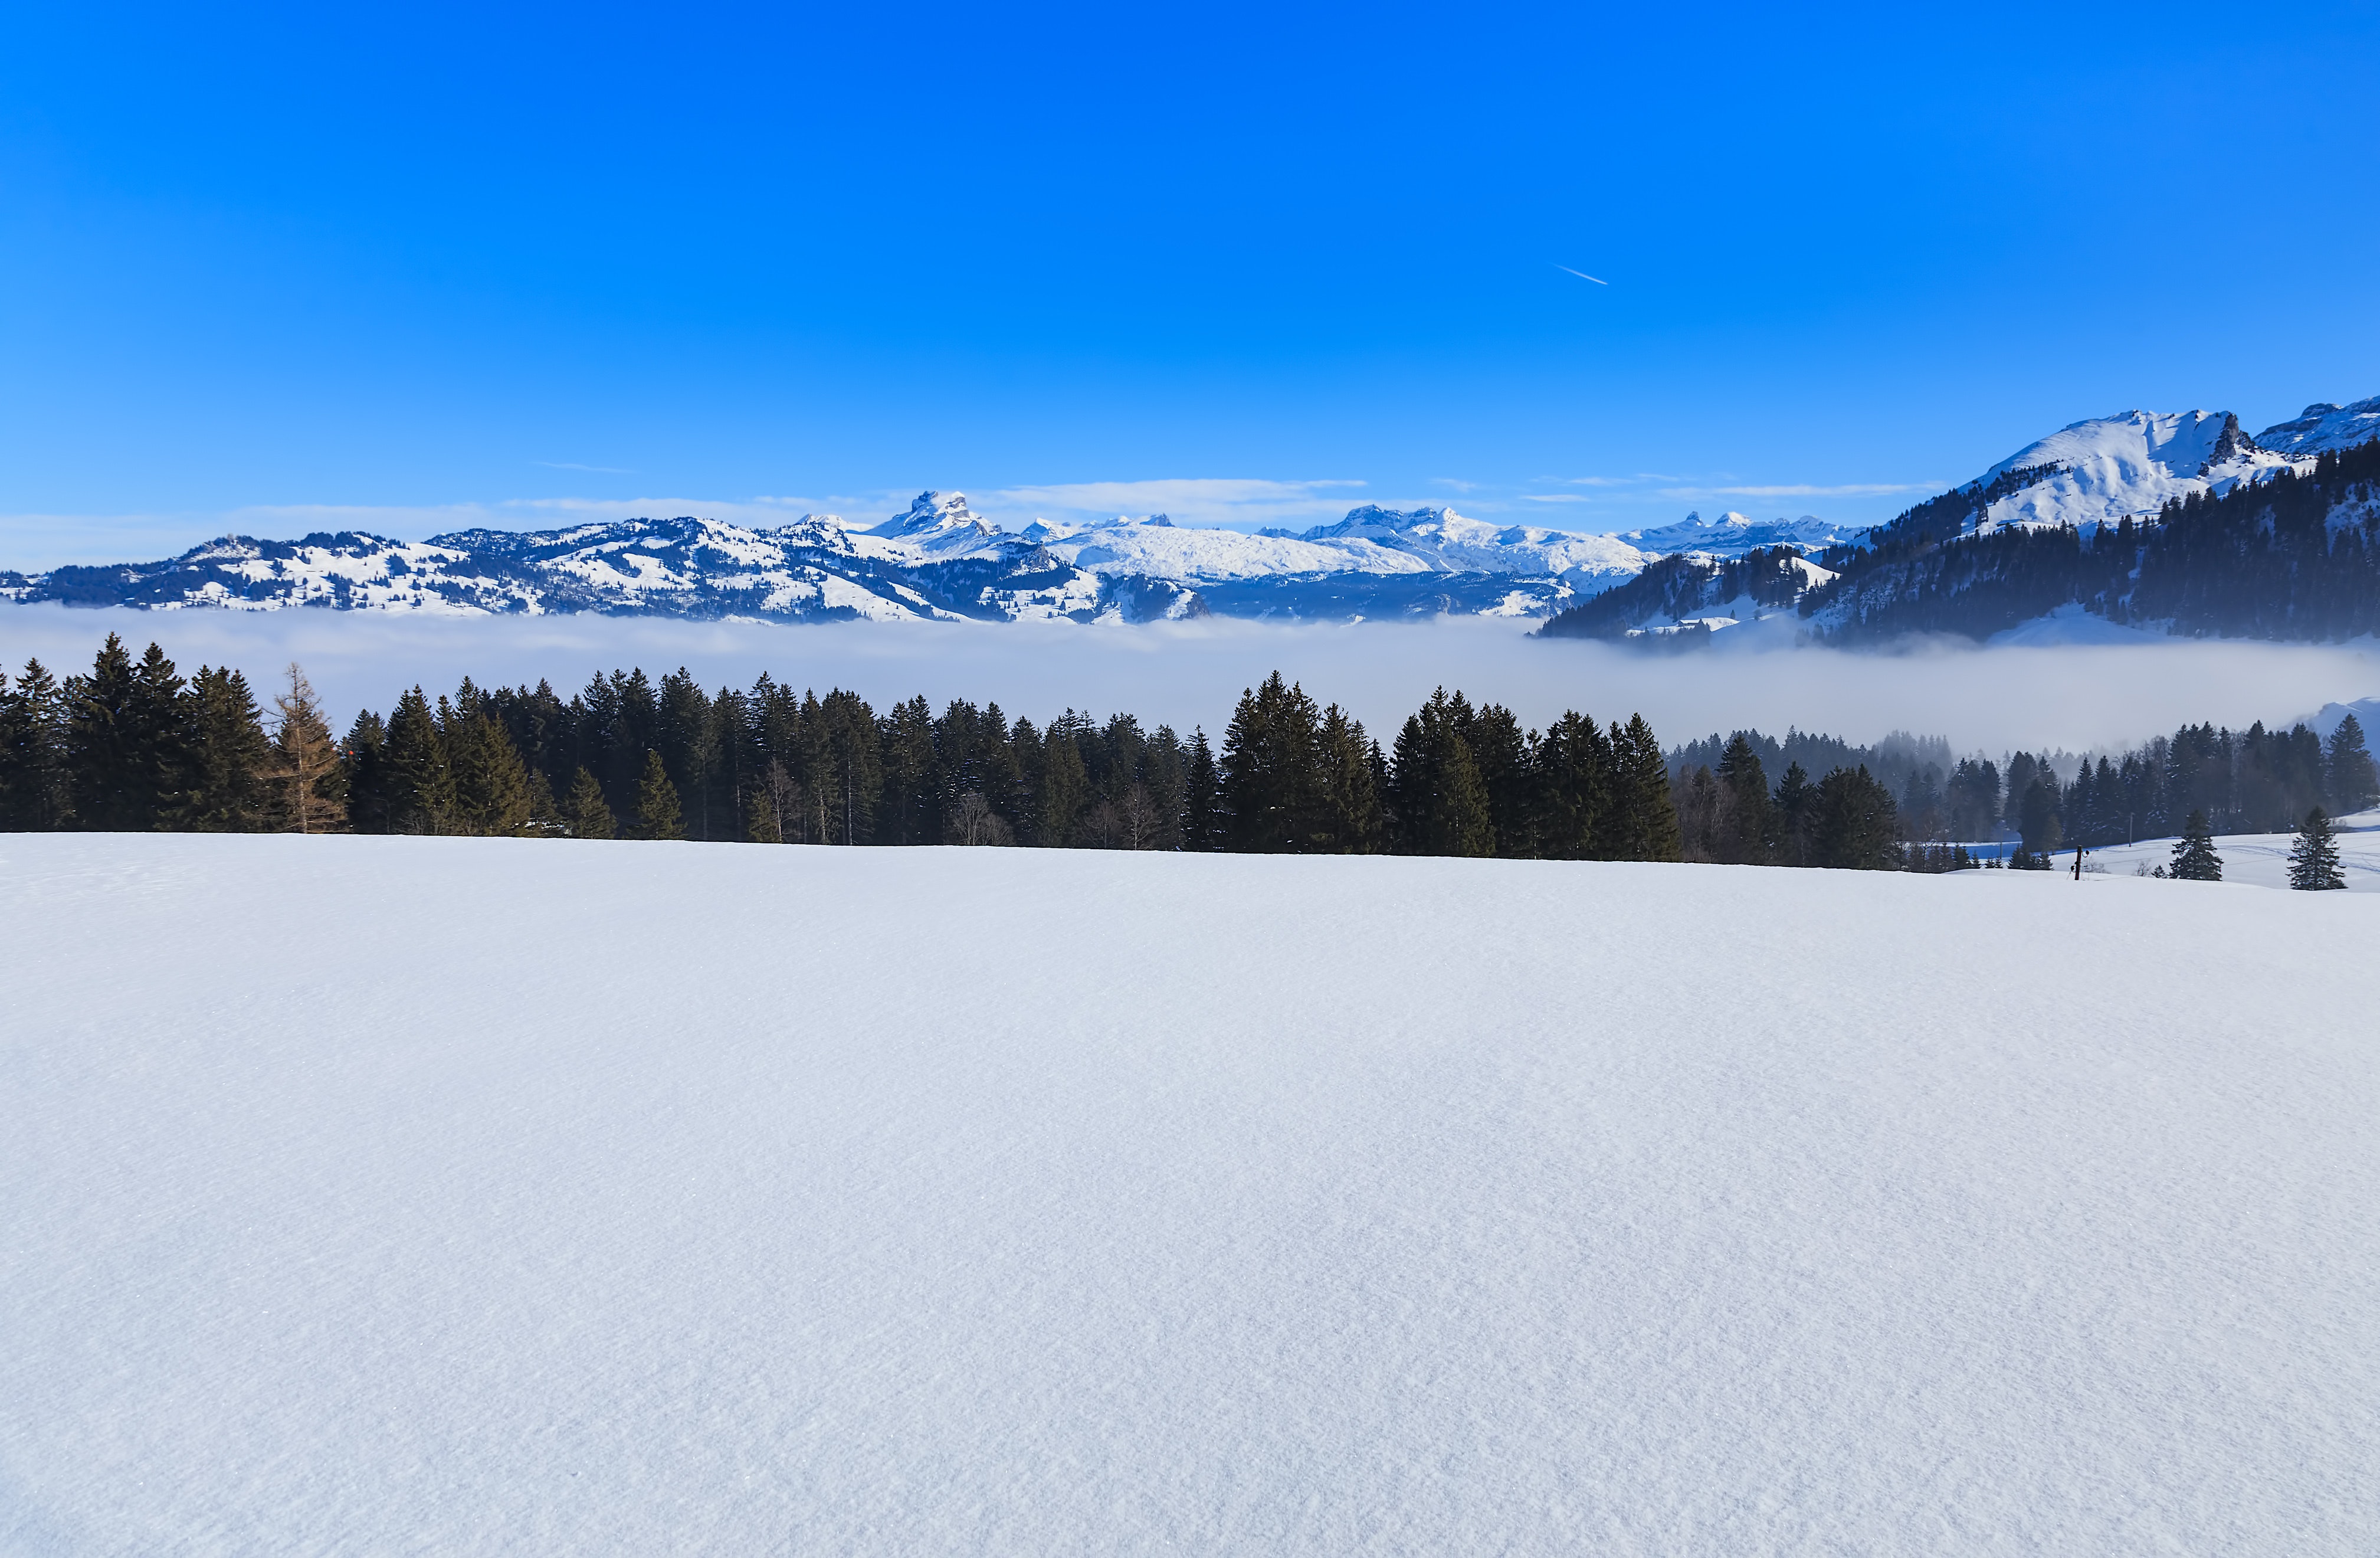 Snowy mountain under blue sky photo